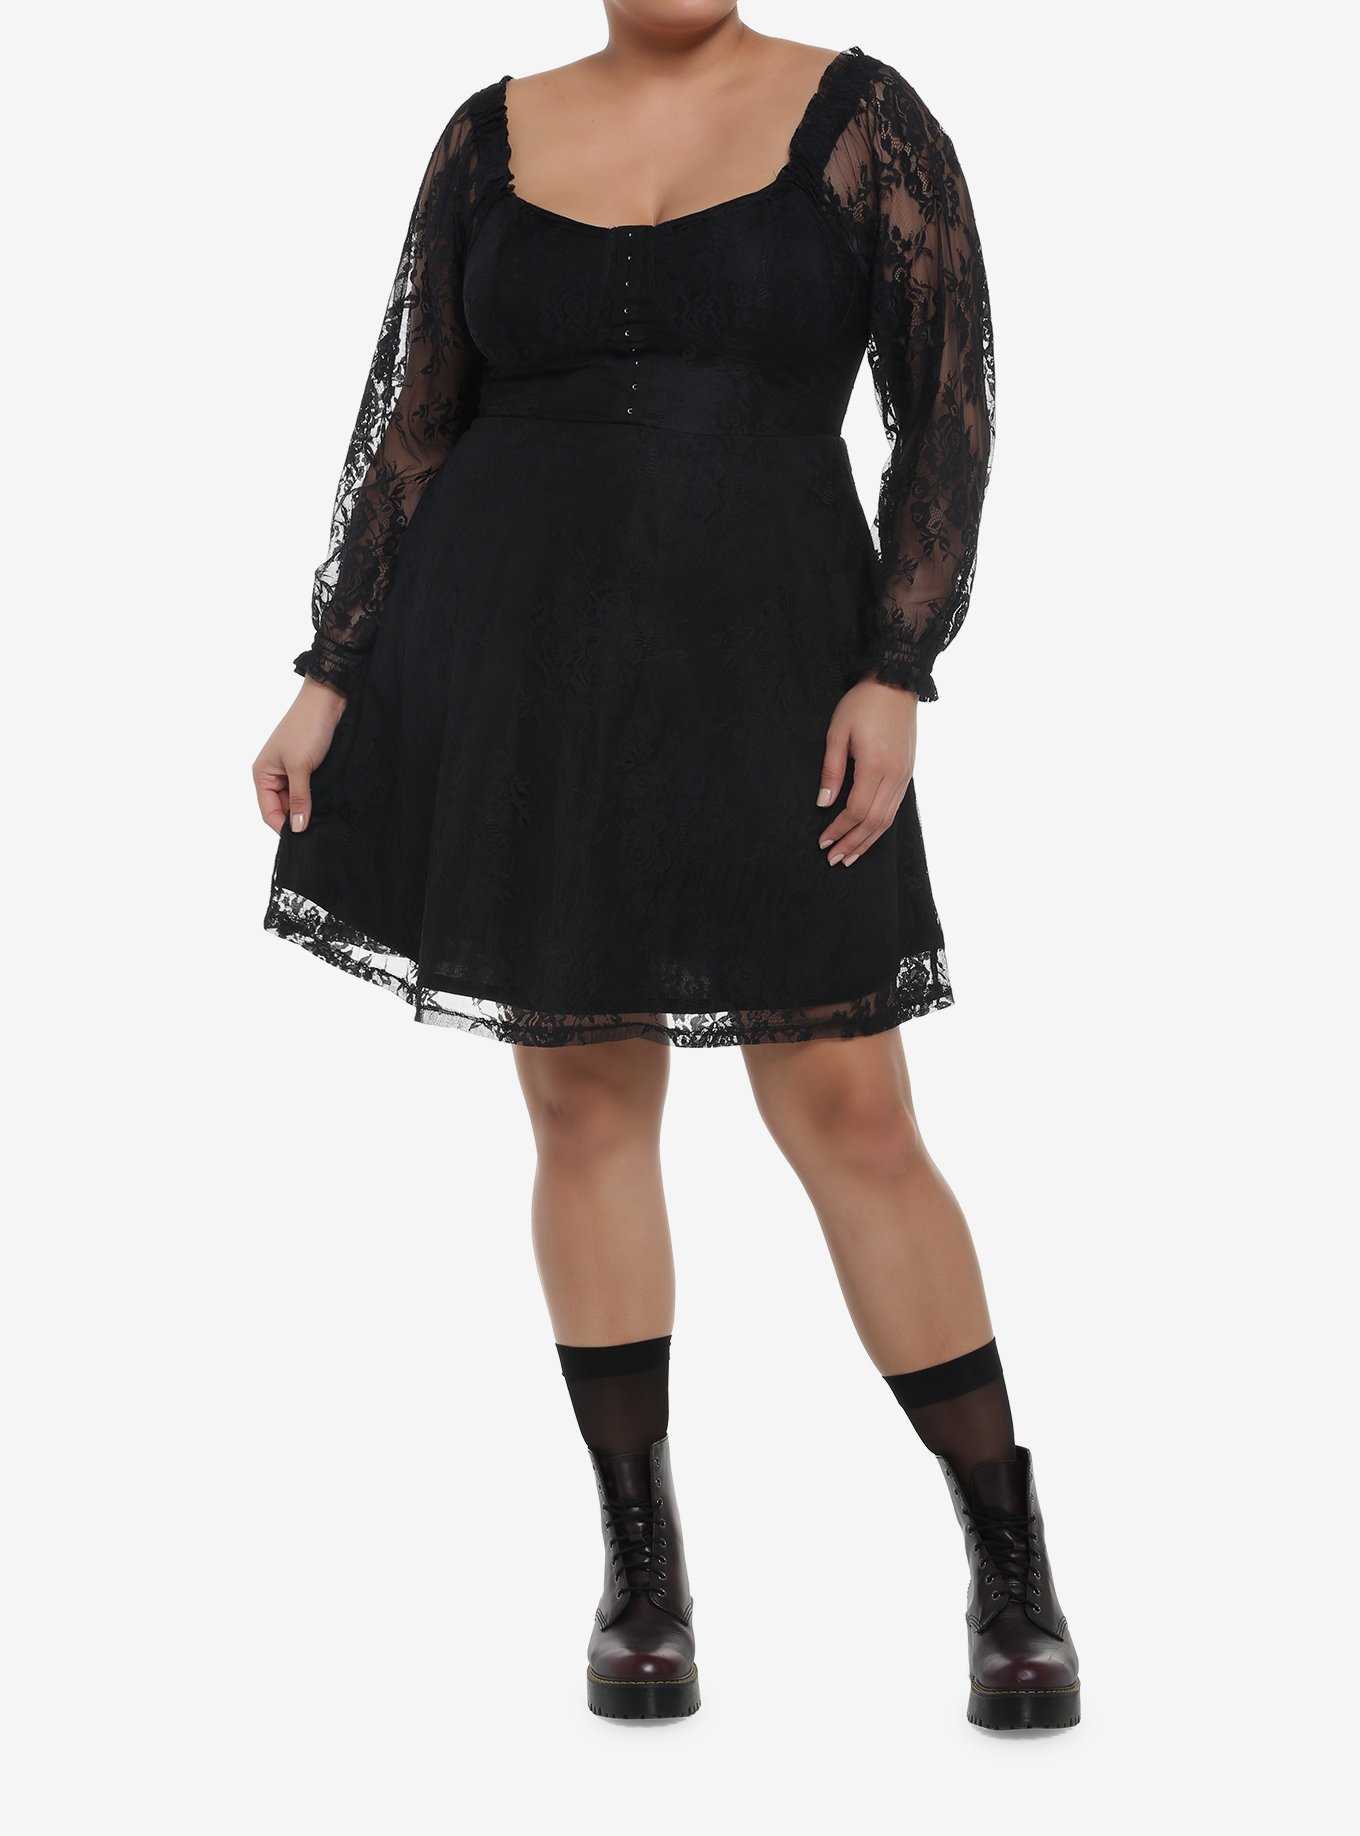 Plus Size Black Dresses